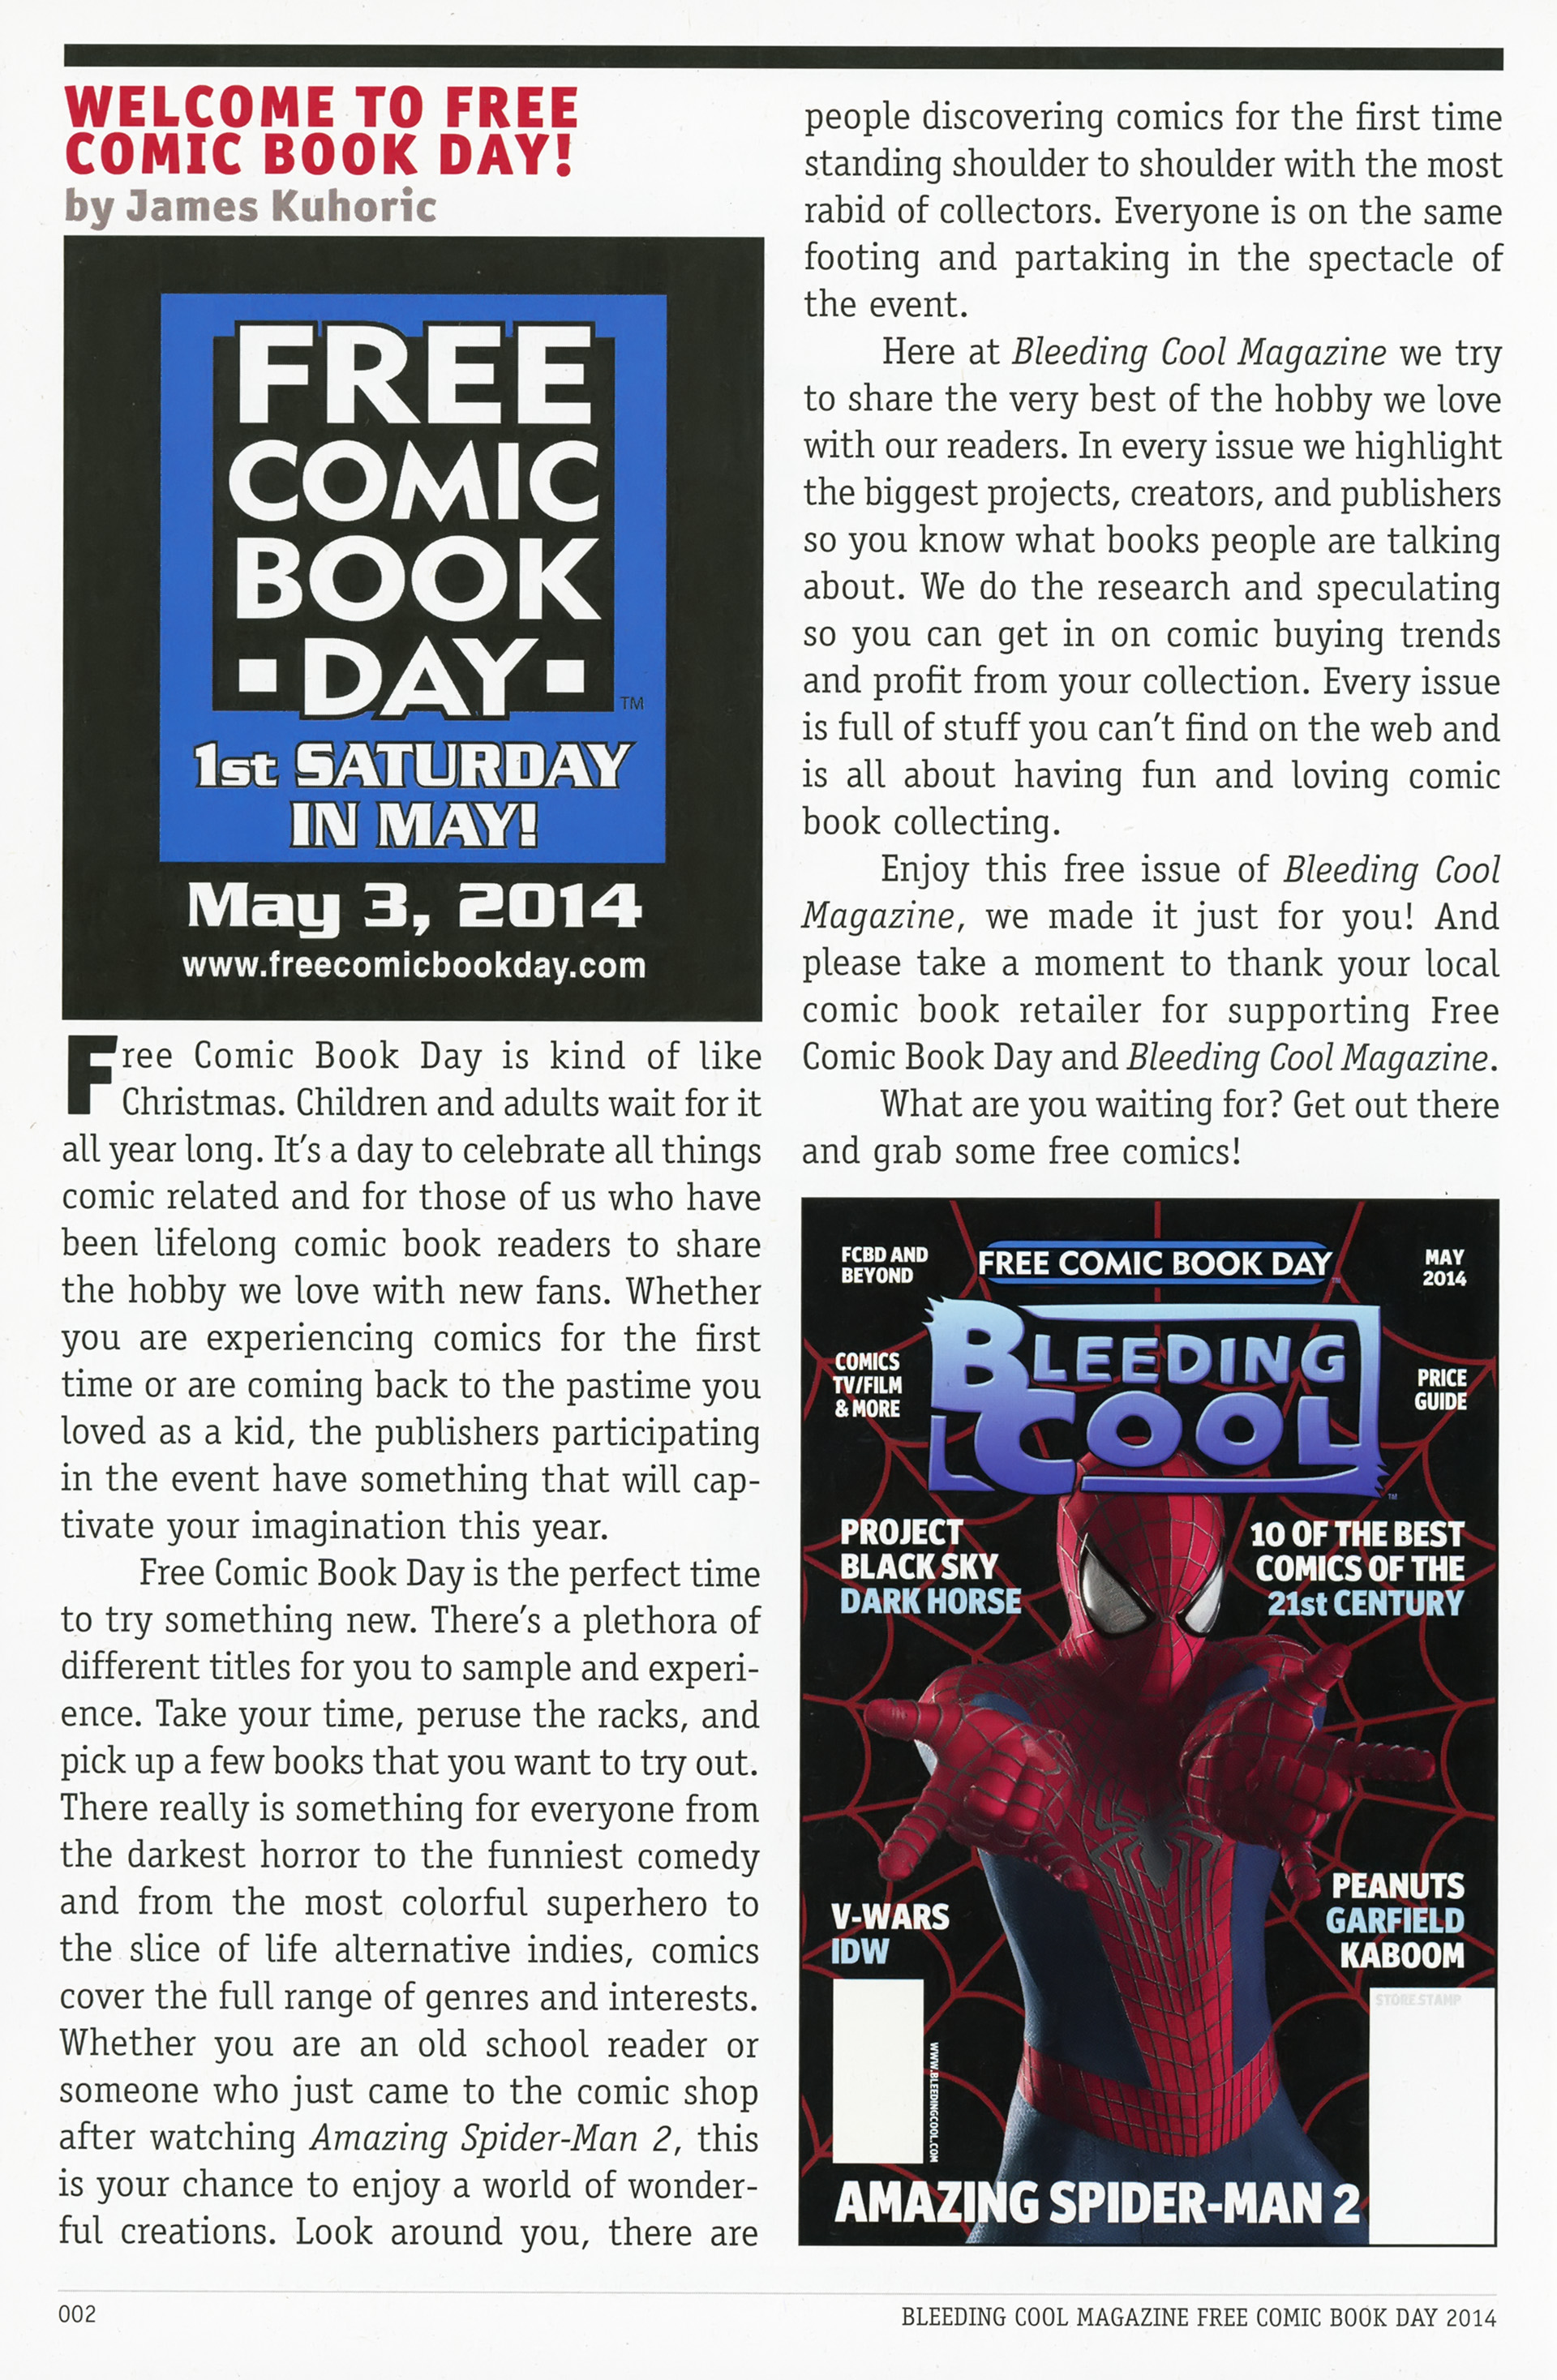 Read online Free Comic Book Day 2014 comic -  Issue # Bleeding Cool Magazine FCBD - 4